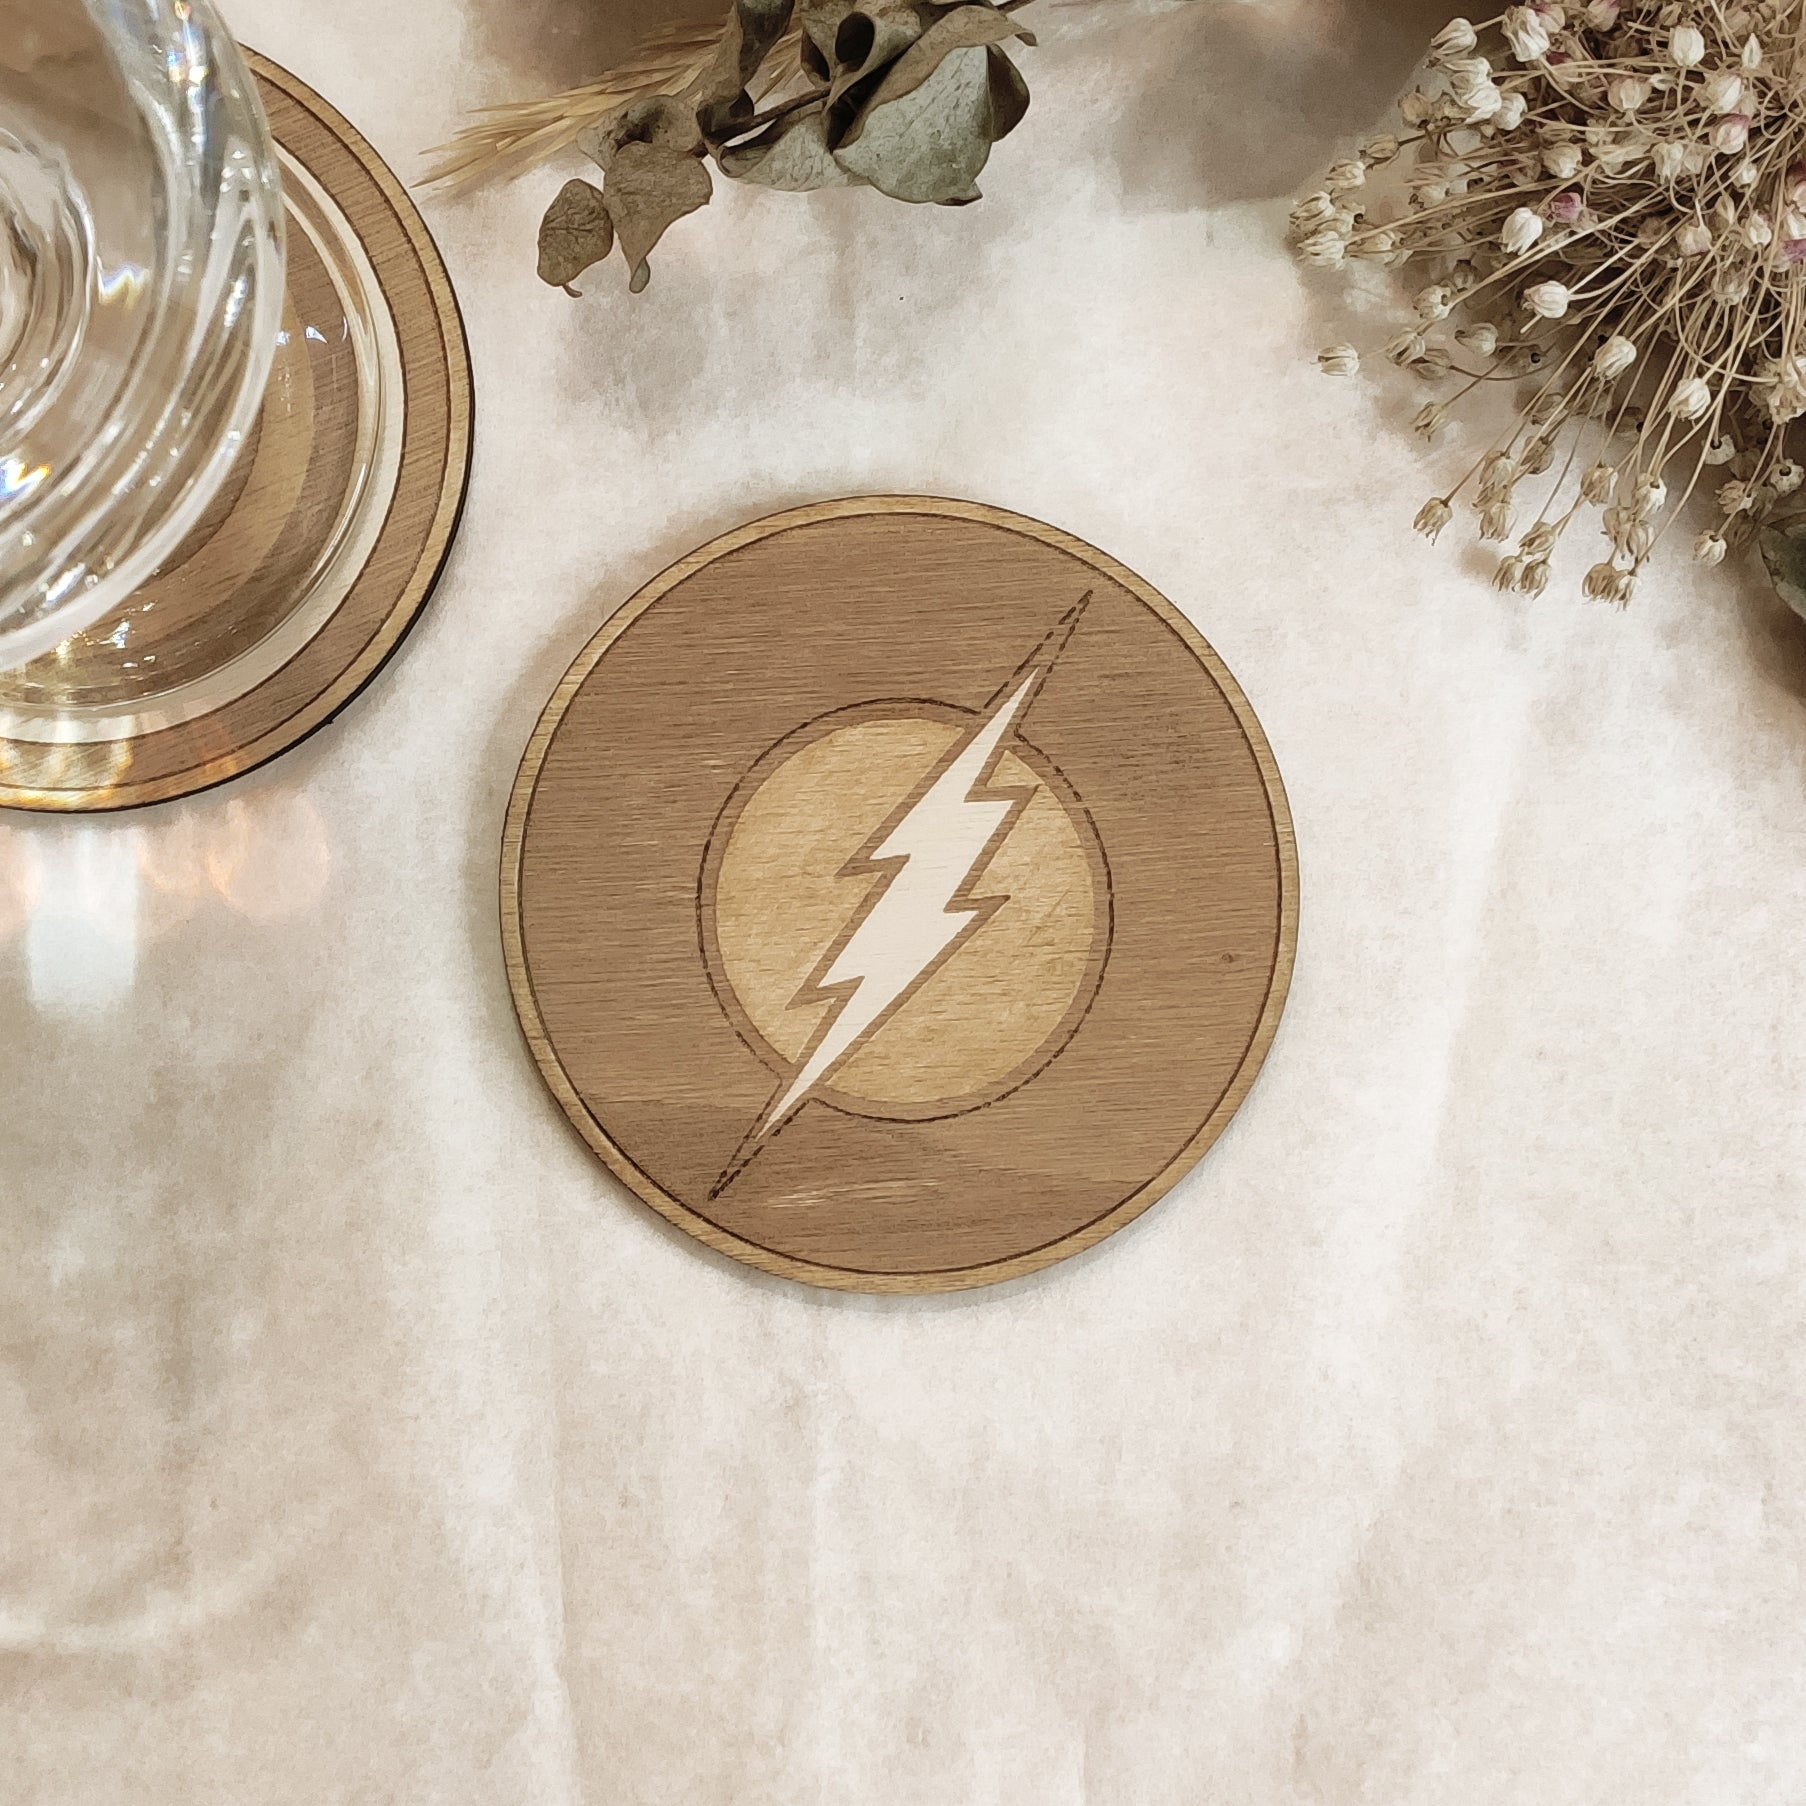 Set of 6 Superheroes Wooden Coasters - Handmade Gift - Housewarming - Wood Kitchenware